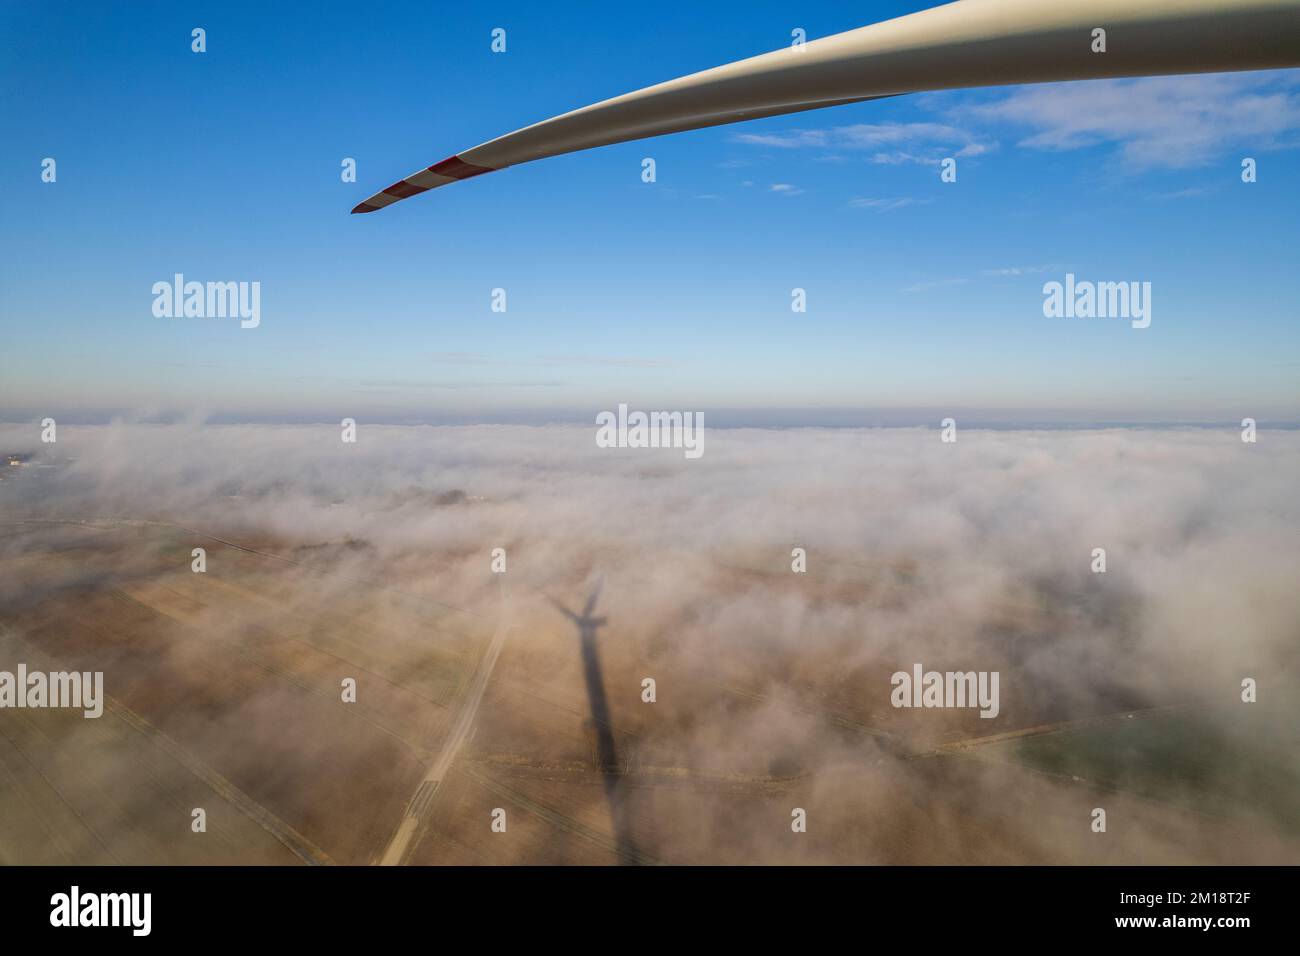 Aerial view of wind turbine Stock Photo